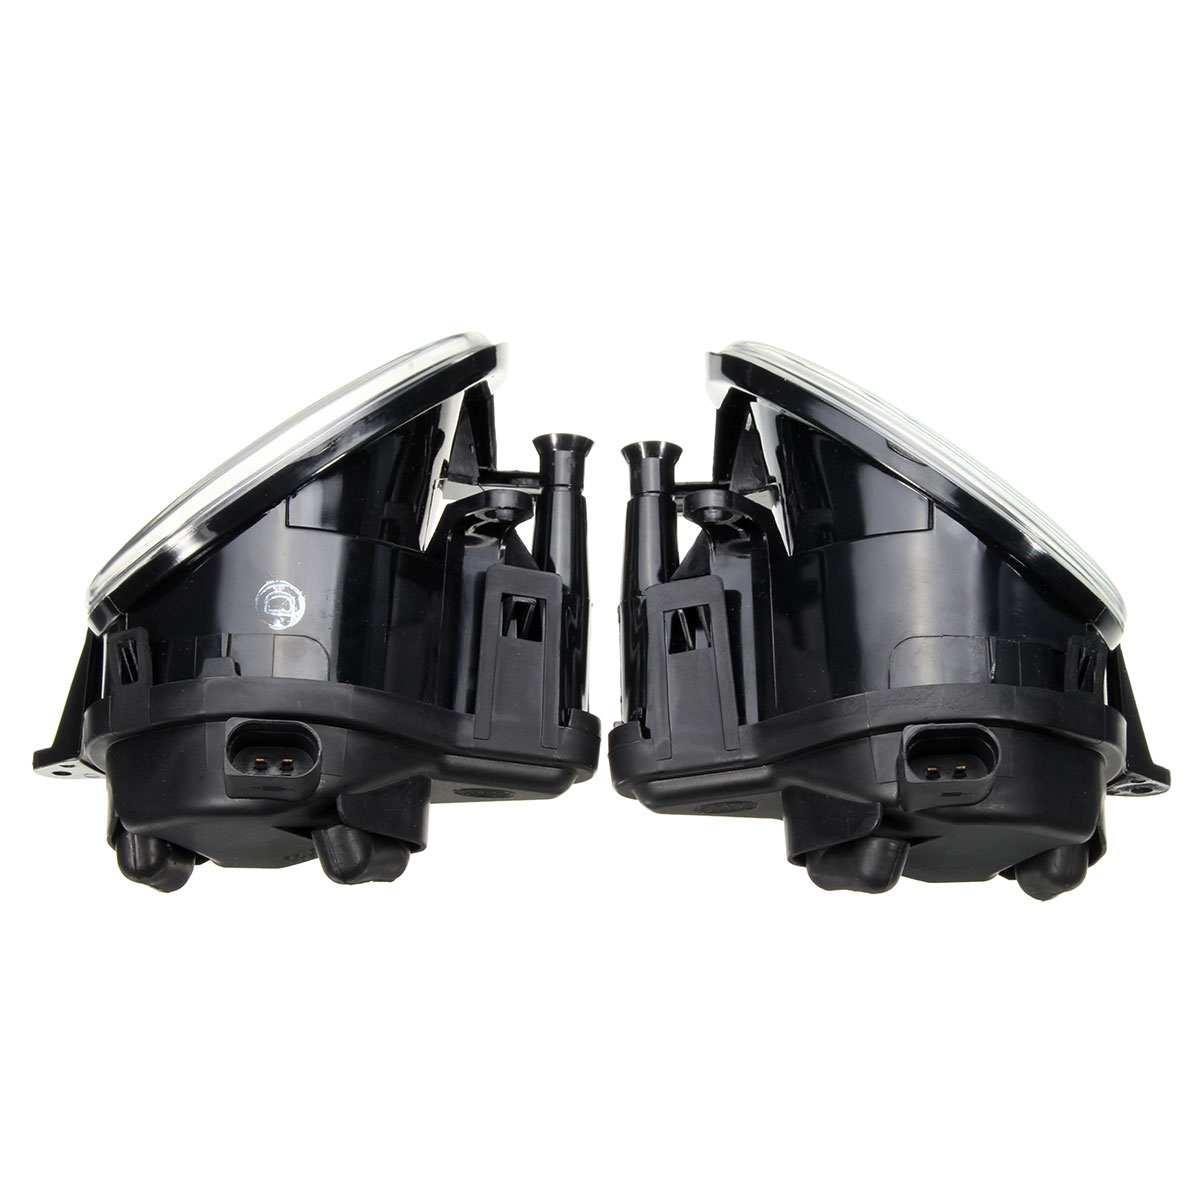 Pair-FrontRL-Bumper-Halogen-Clean-Fog-Lights-Lamps-For-Audi-Q7A3-8P0941699A-1053821